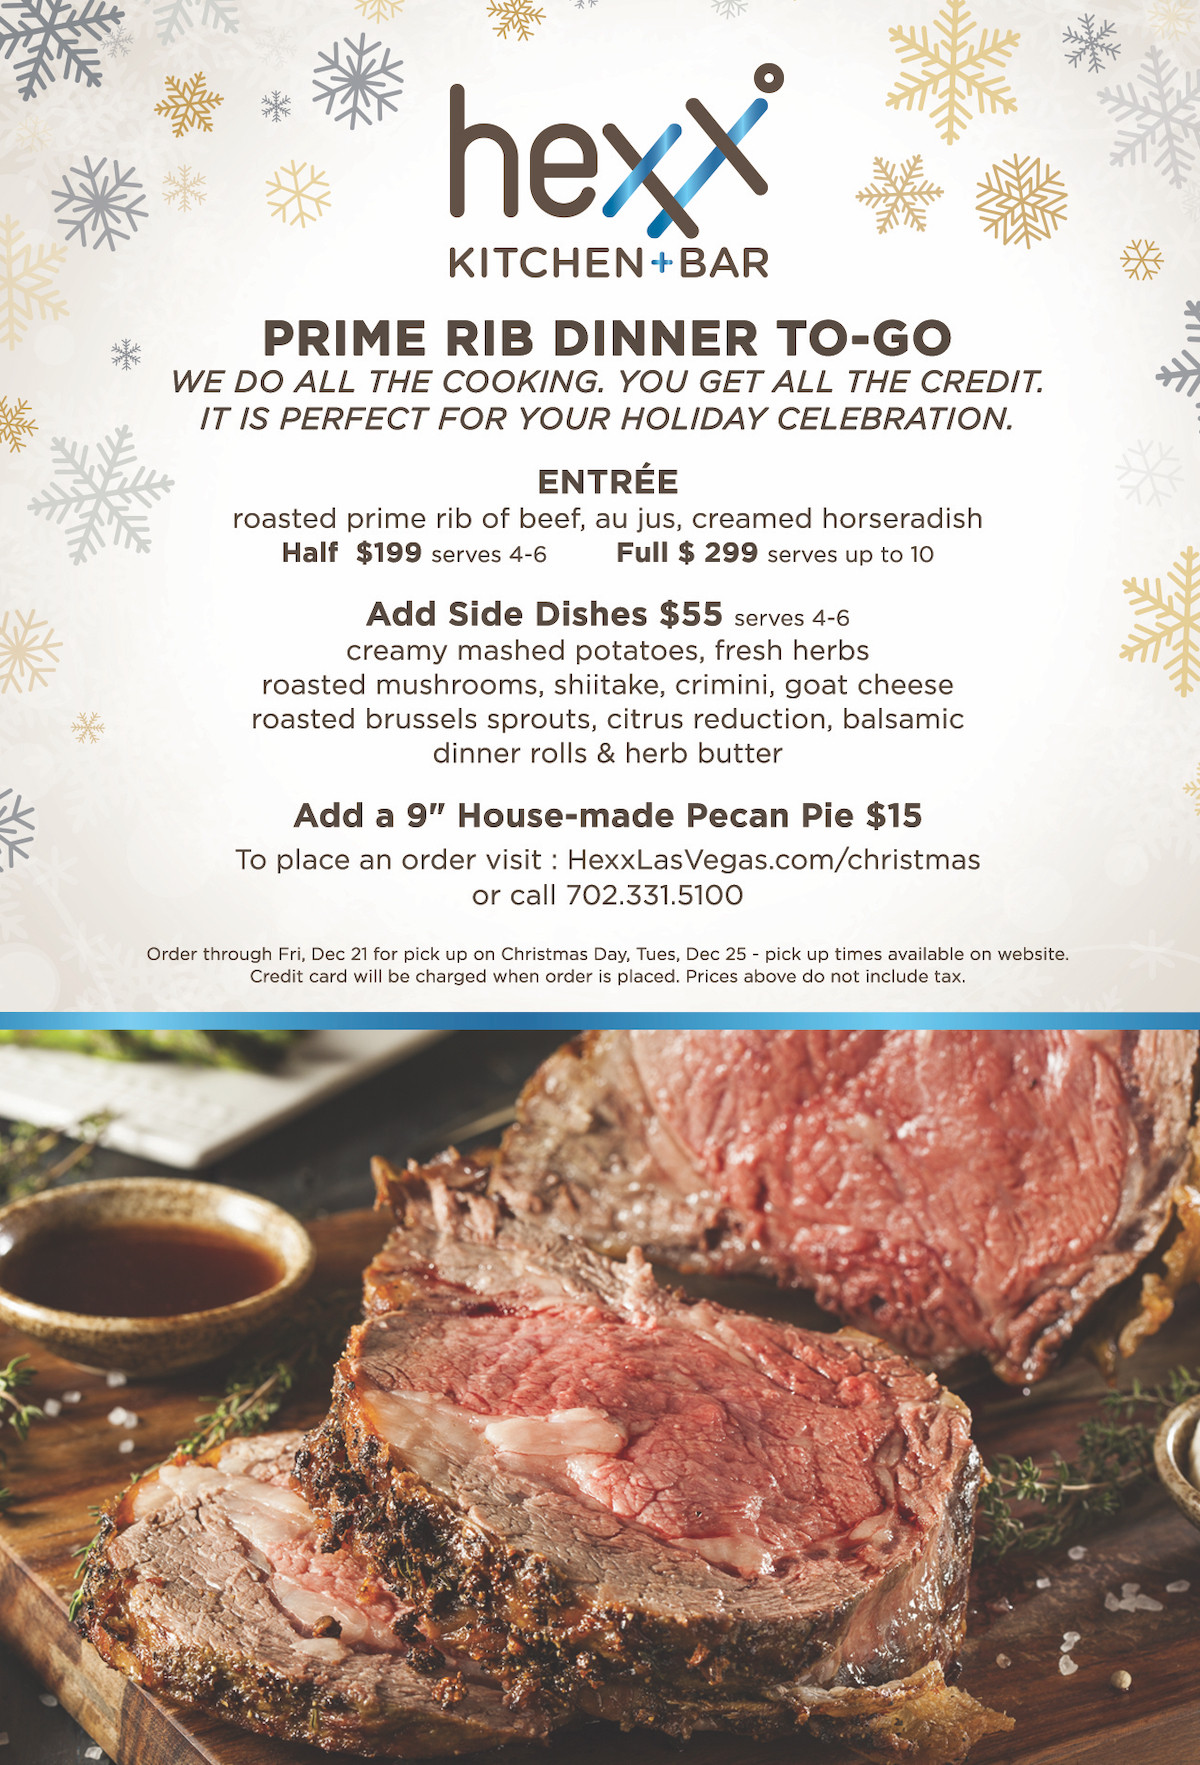 Prime Rib Christmas Dinner Menus
 christmas dinner 2018 HEXX kitchen bar Paris Las